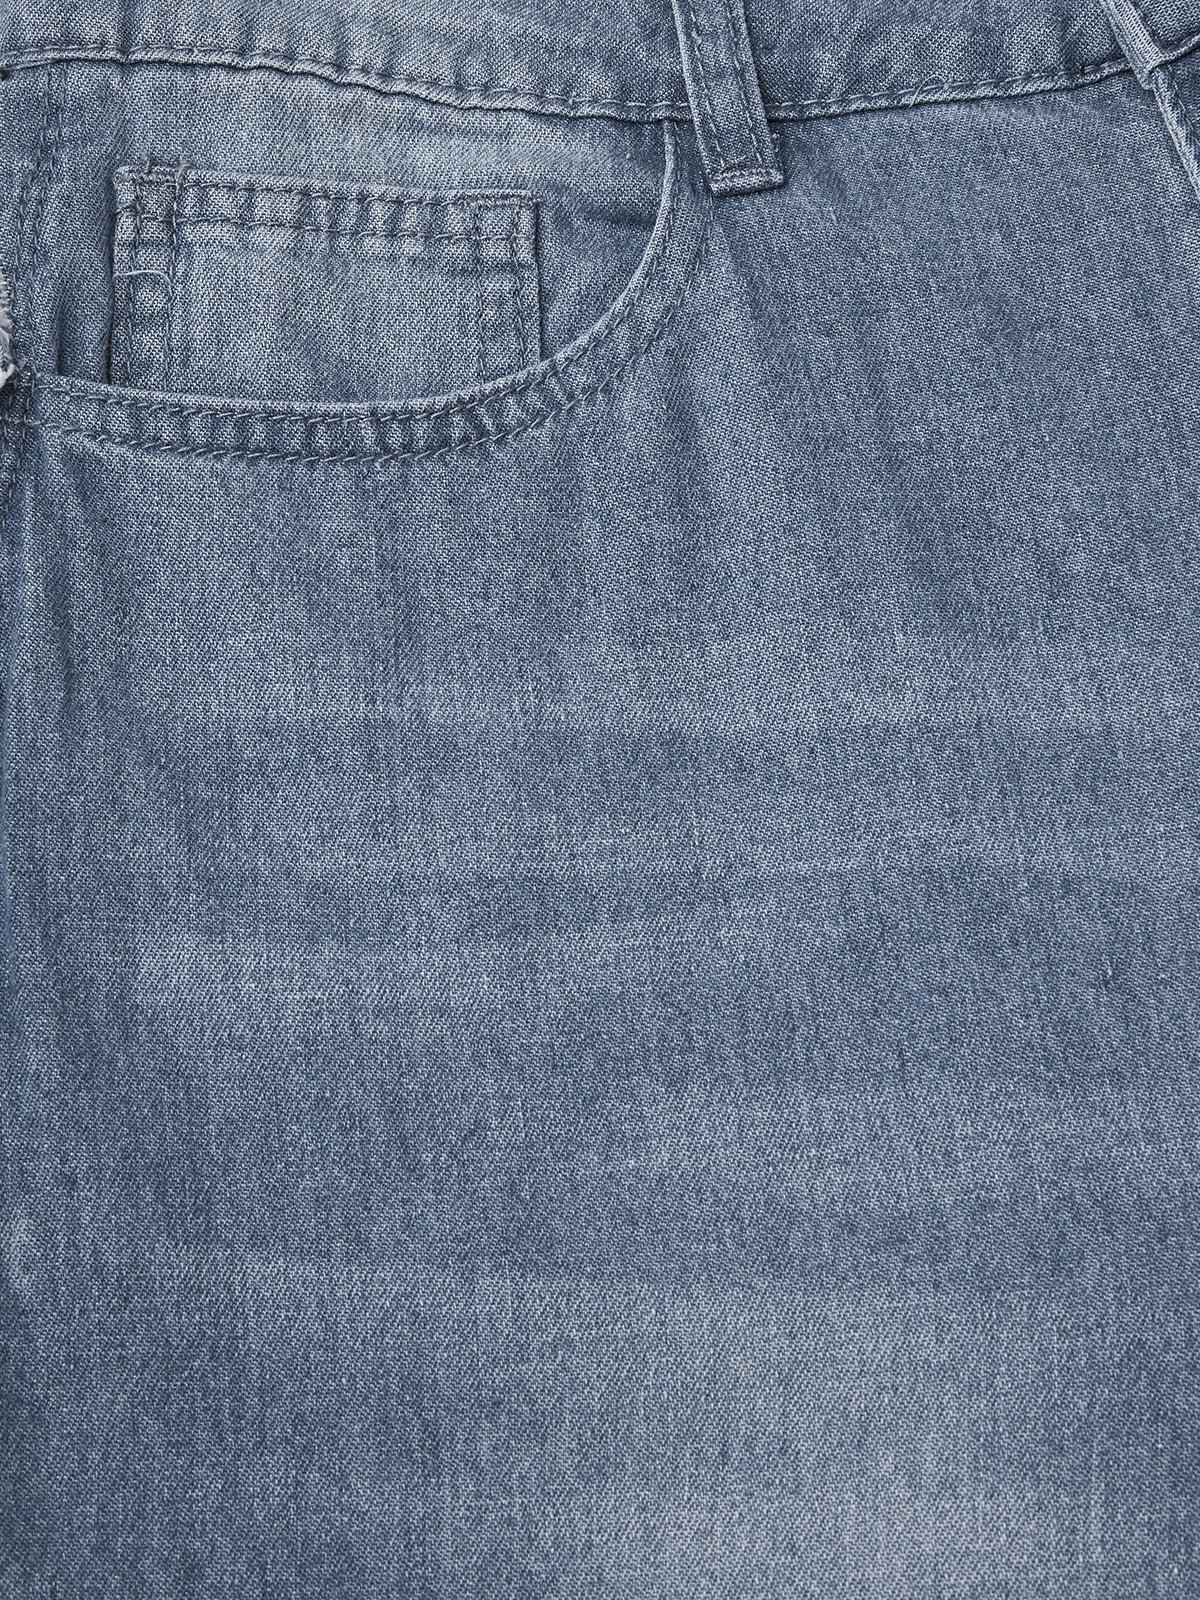 Urban Weit Lang Glatt Unifarben Jeans